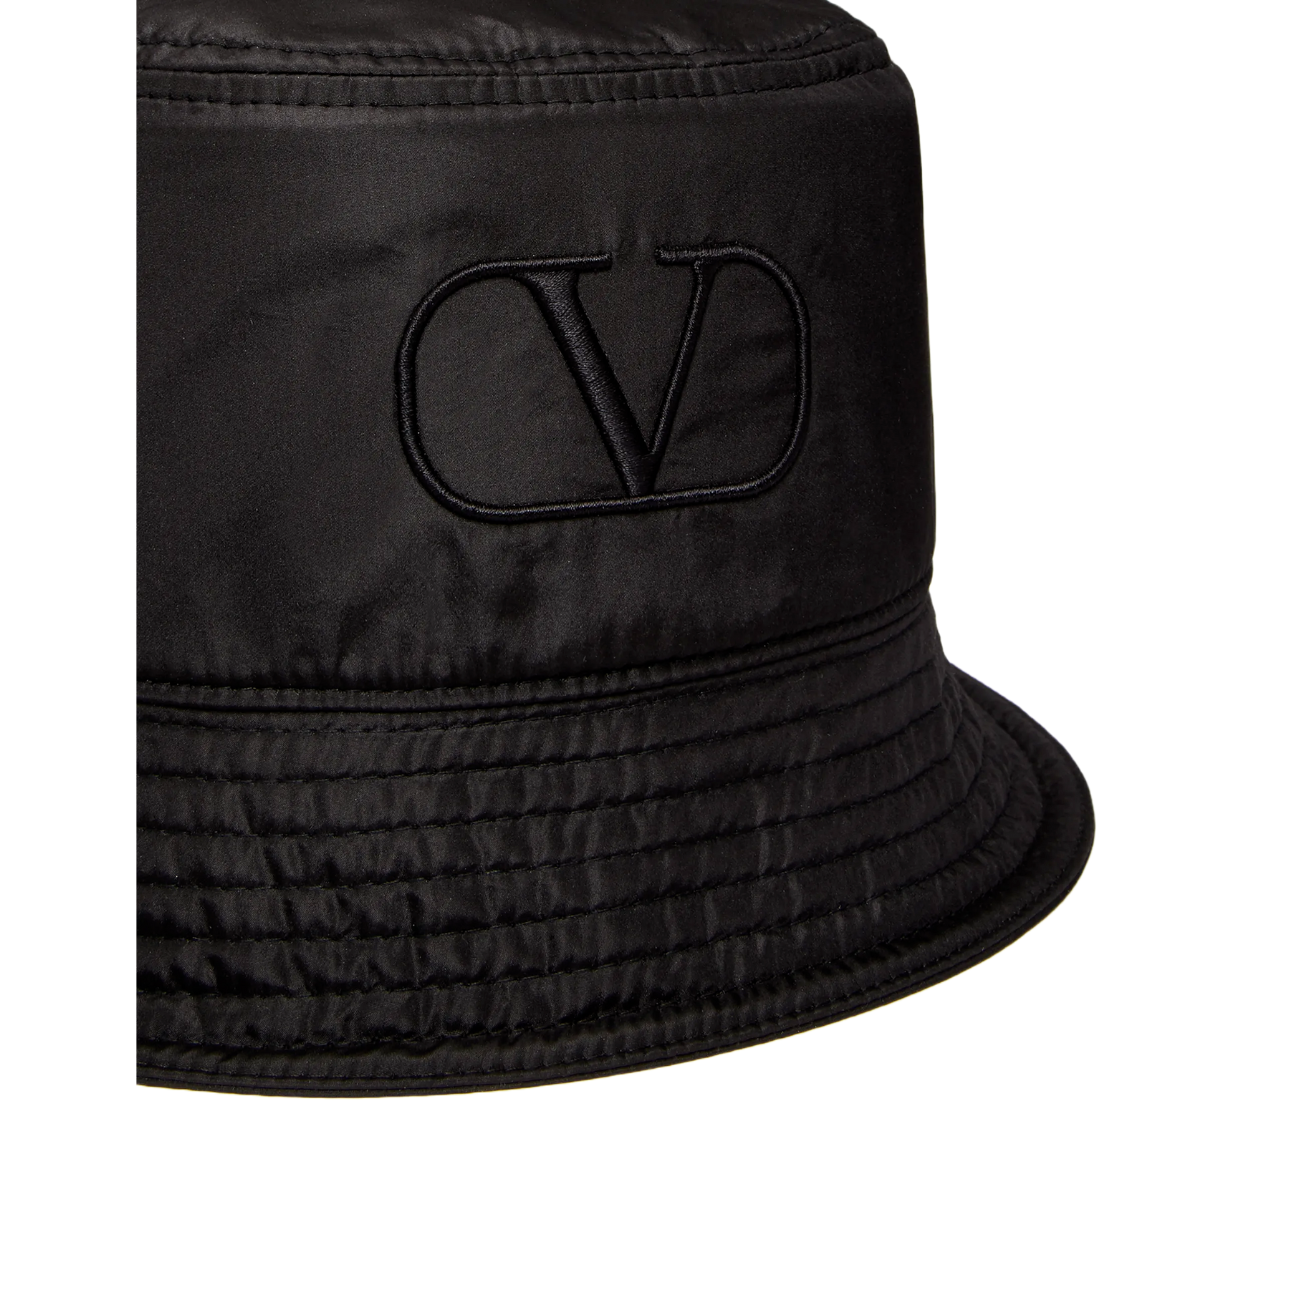 Valentino VLogo Signature Silk Men's Bucket Hat